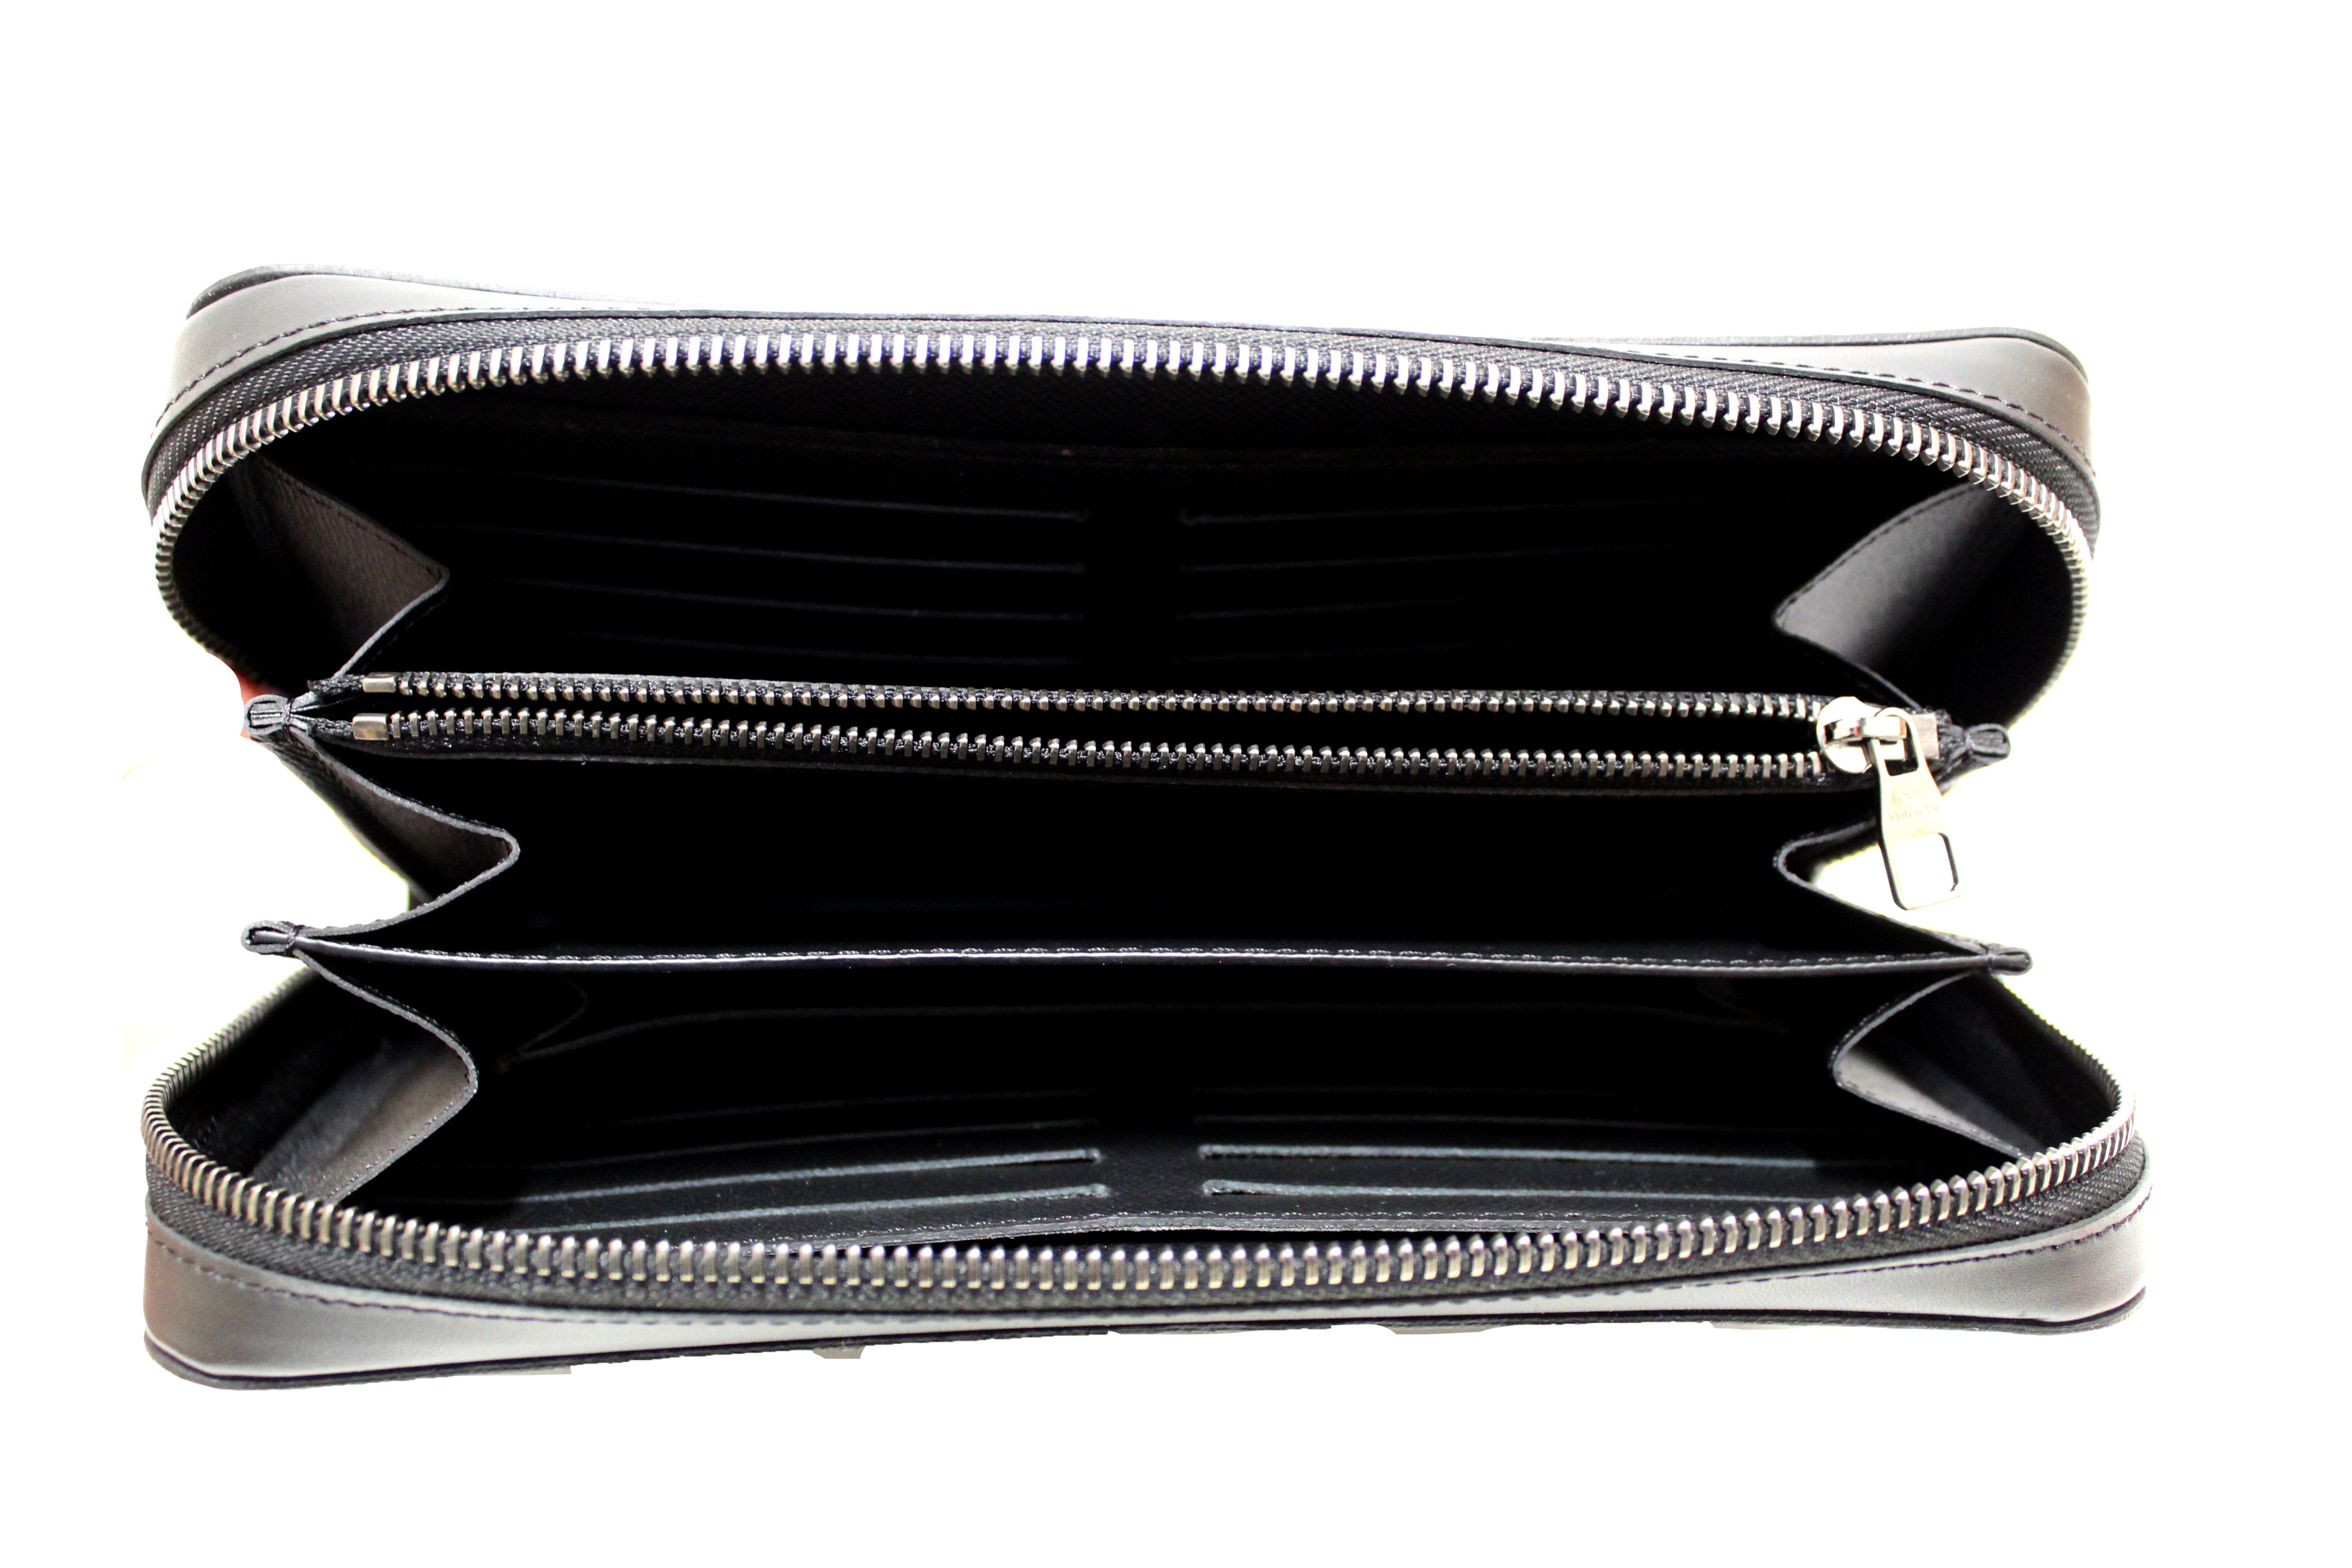 Louis Vuitton Zippy XL Wallet Black Monogram Eclipse - Allu USA